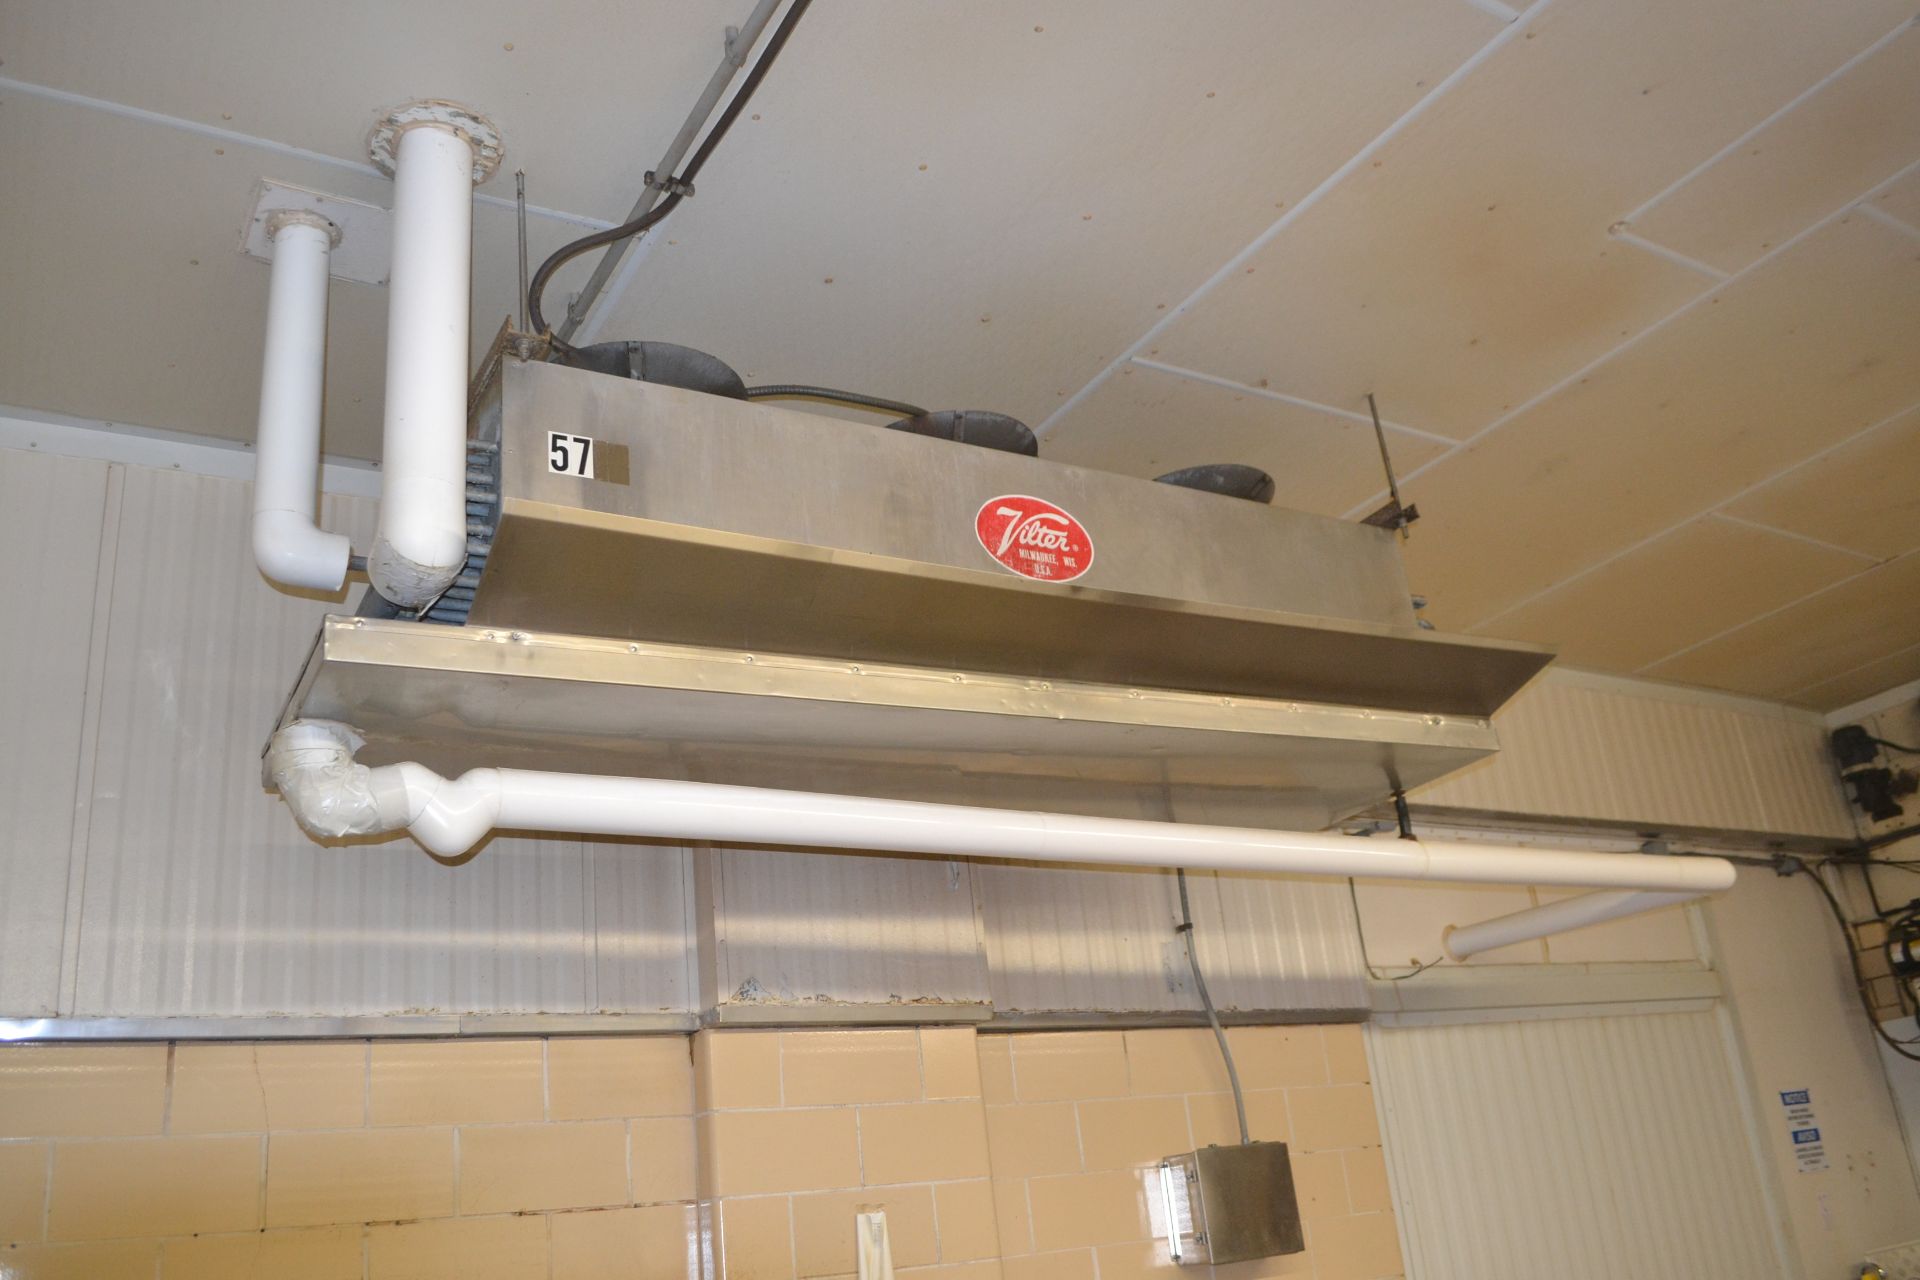 1 Vilter 3 fan S/S ammonia evaporator # 59 (in hallway)